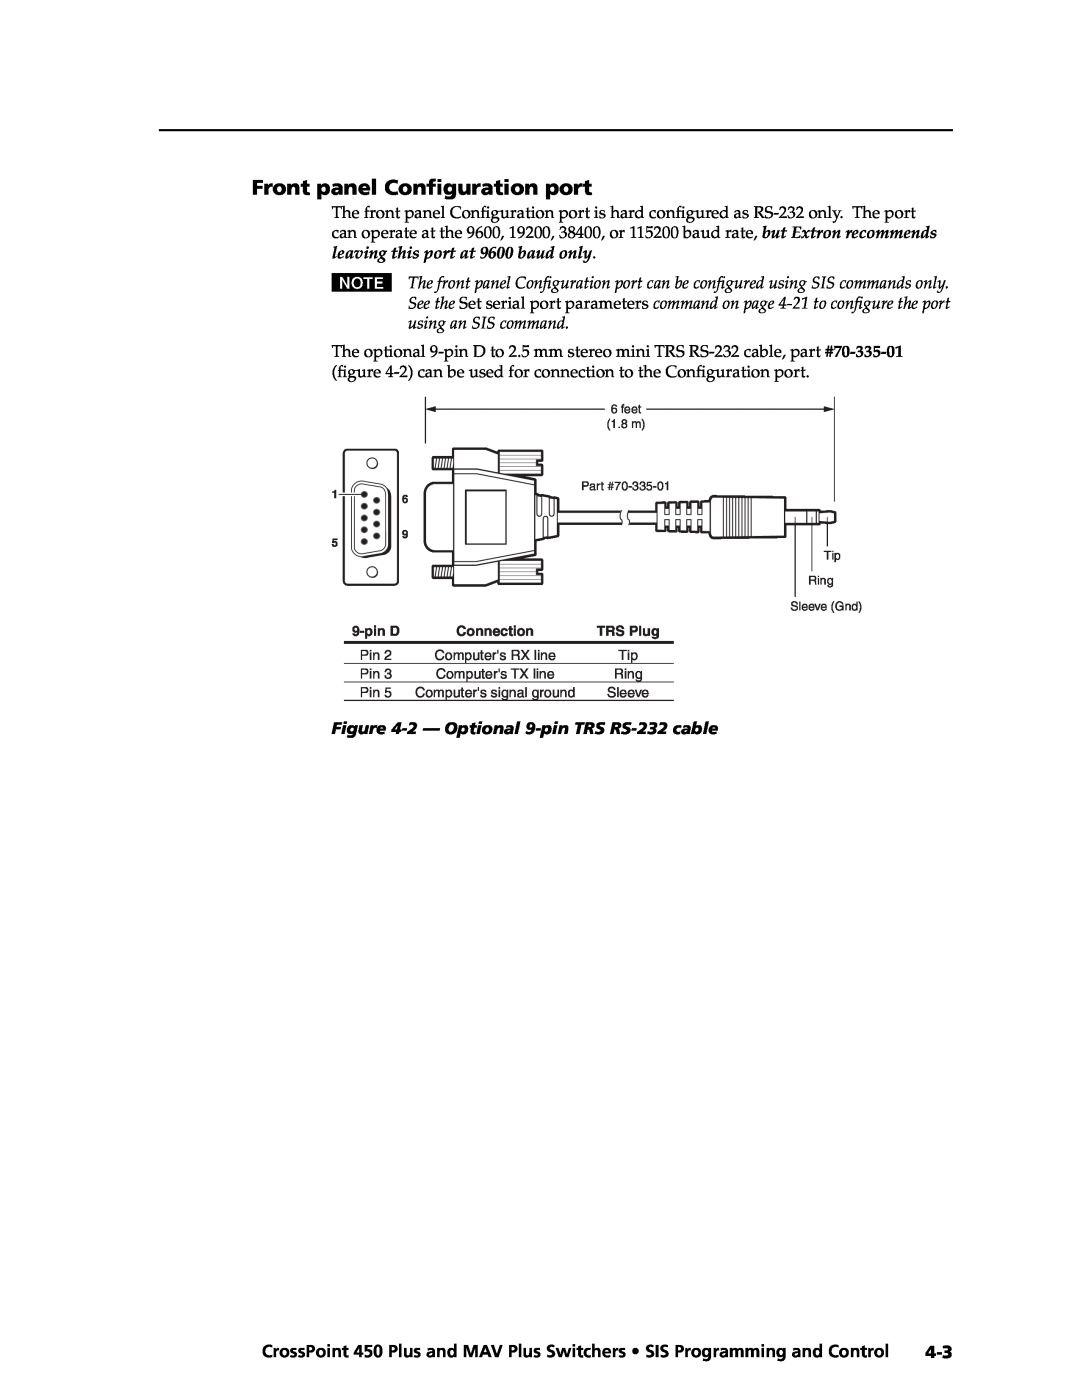 Extron electronic 450 Plus, MAV Plus manual Front panel Conﬁguration port, 2 - Optional 9-pin TRS RS-232 cable 